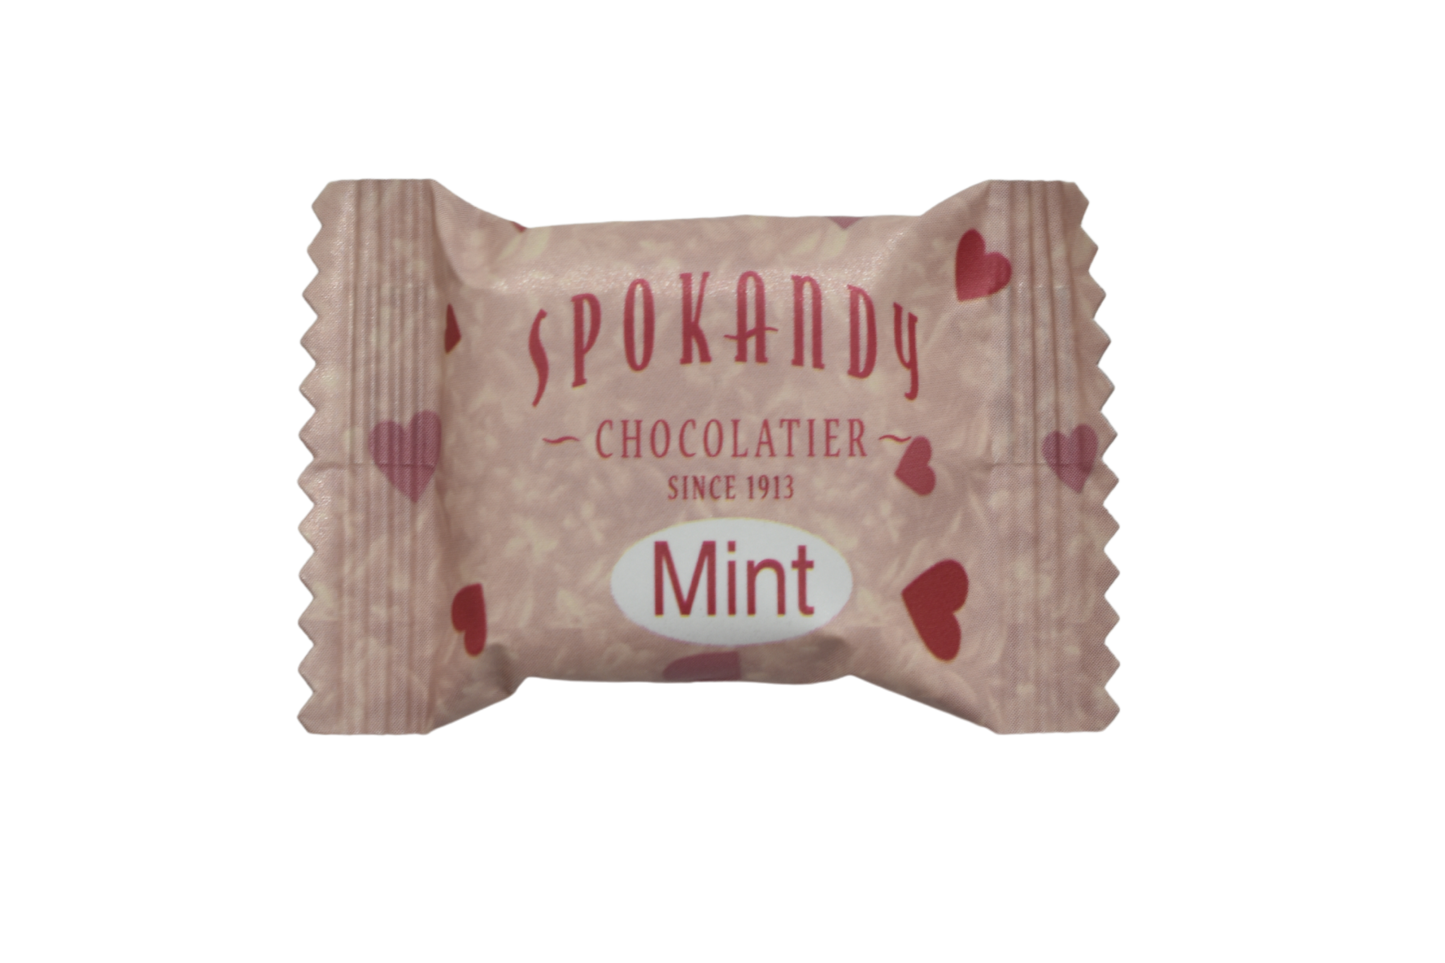 Spokandy Chocolatier - Hearts Mint